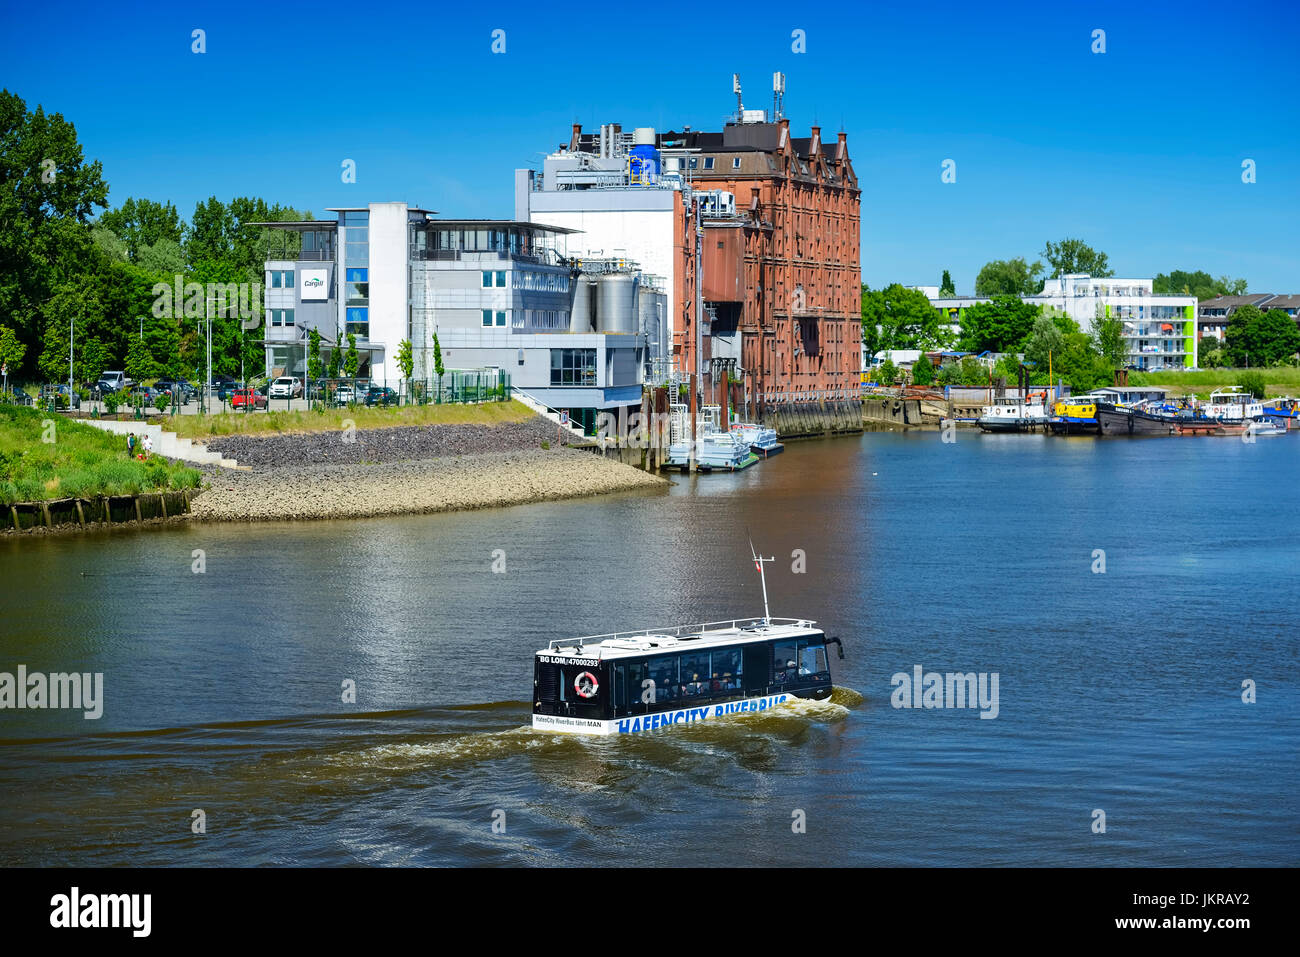 Swimming coach and tourist attraction harbour city Riverbus in Rothenburgsort, Hamburg, Germany, Europe, Schwimmender Bus und Touristenattraktion Hafe Stock Photo